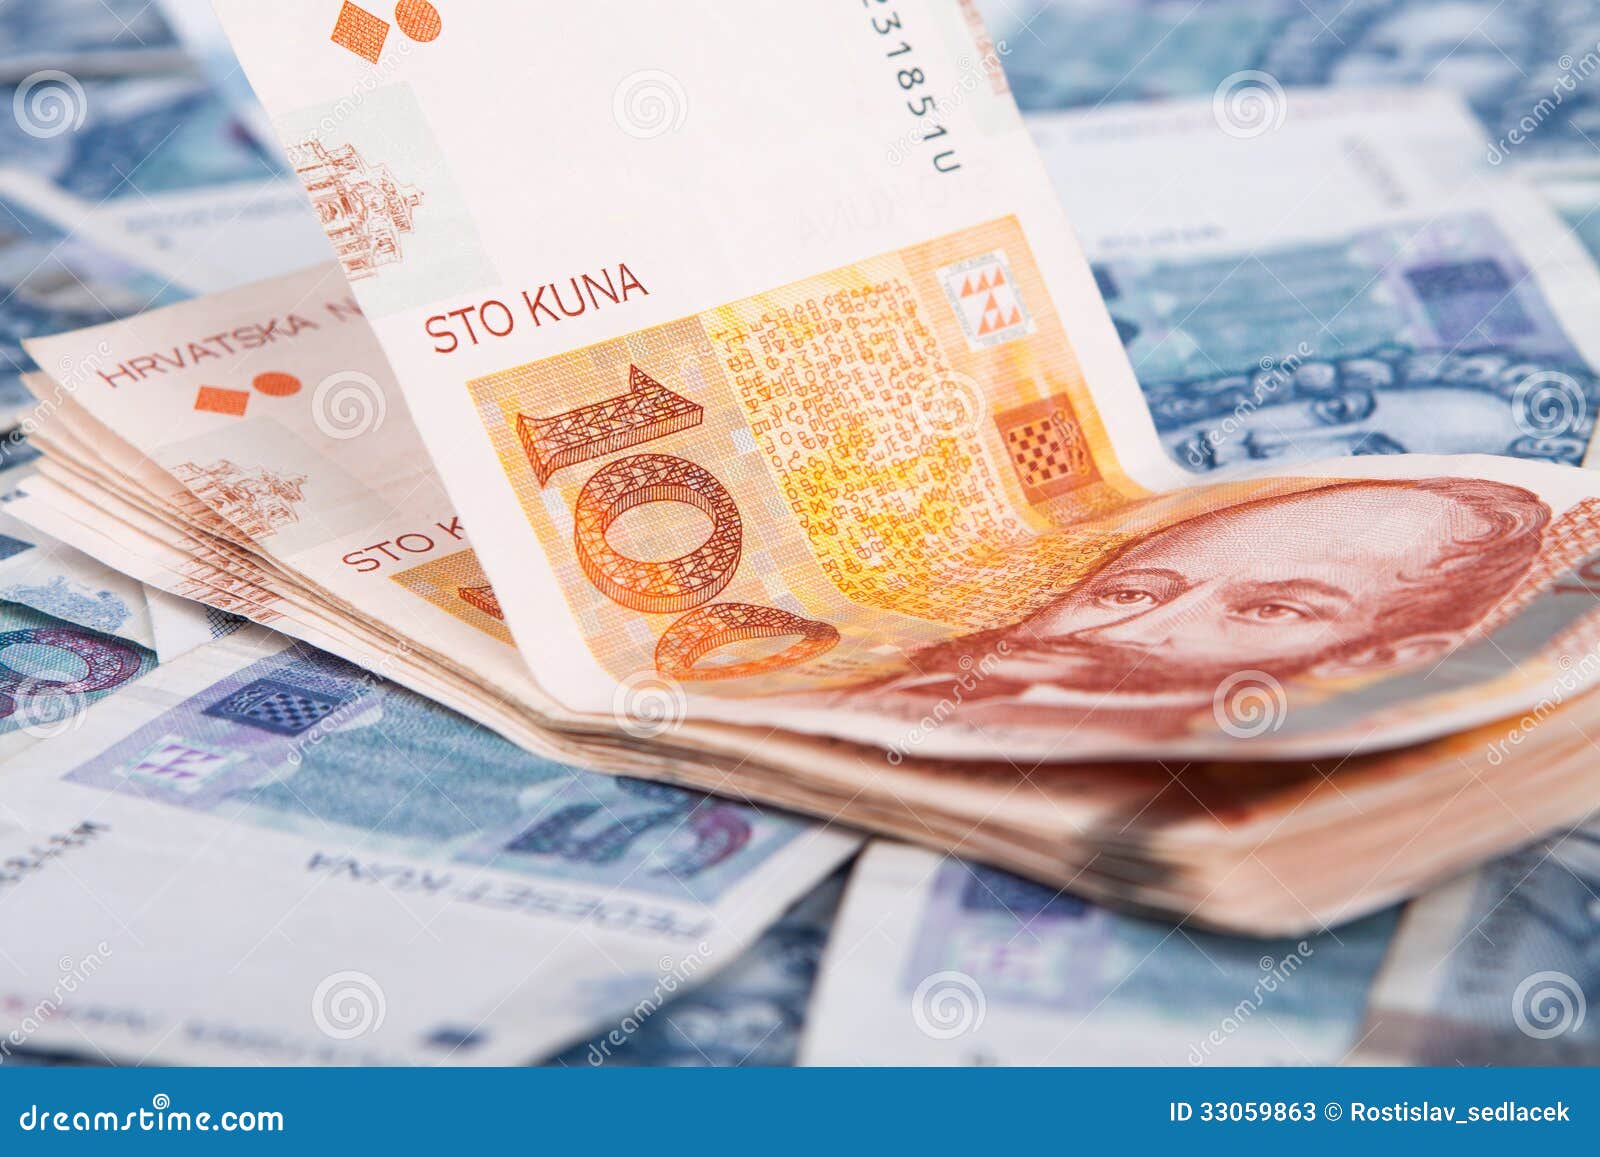 croatian money, kuna